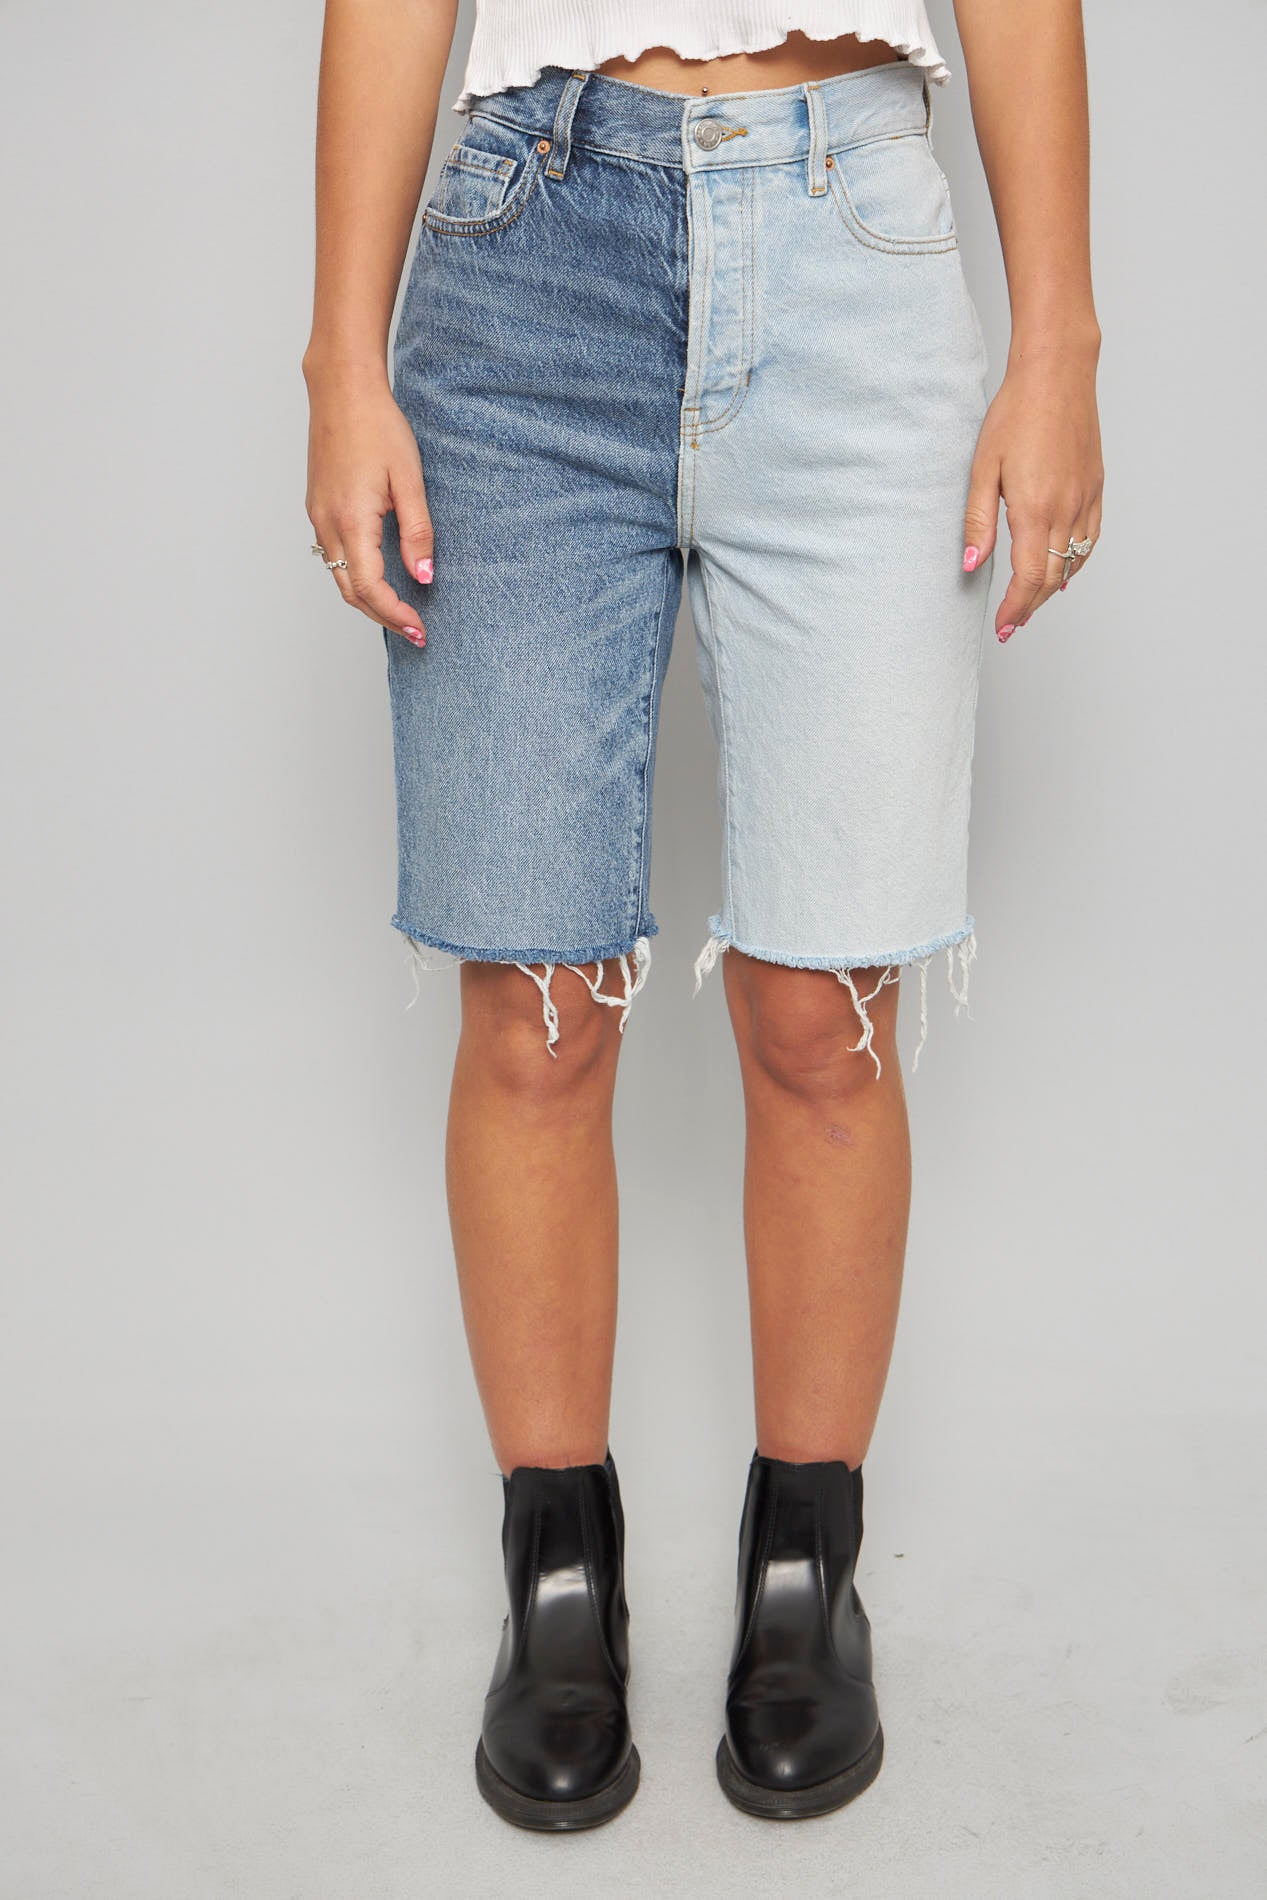 Shorts casual  azul lovemade talla 36 309